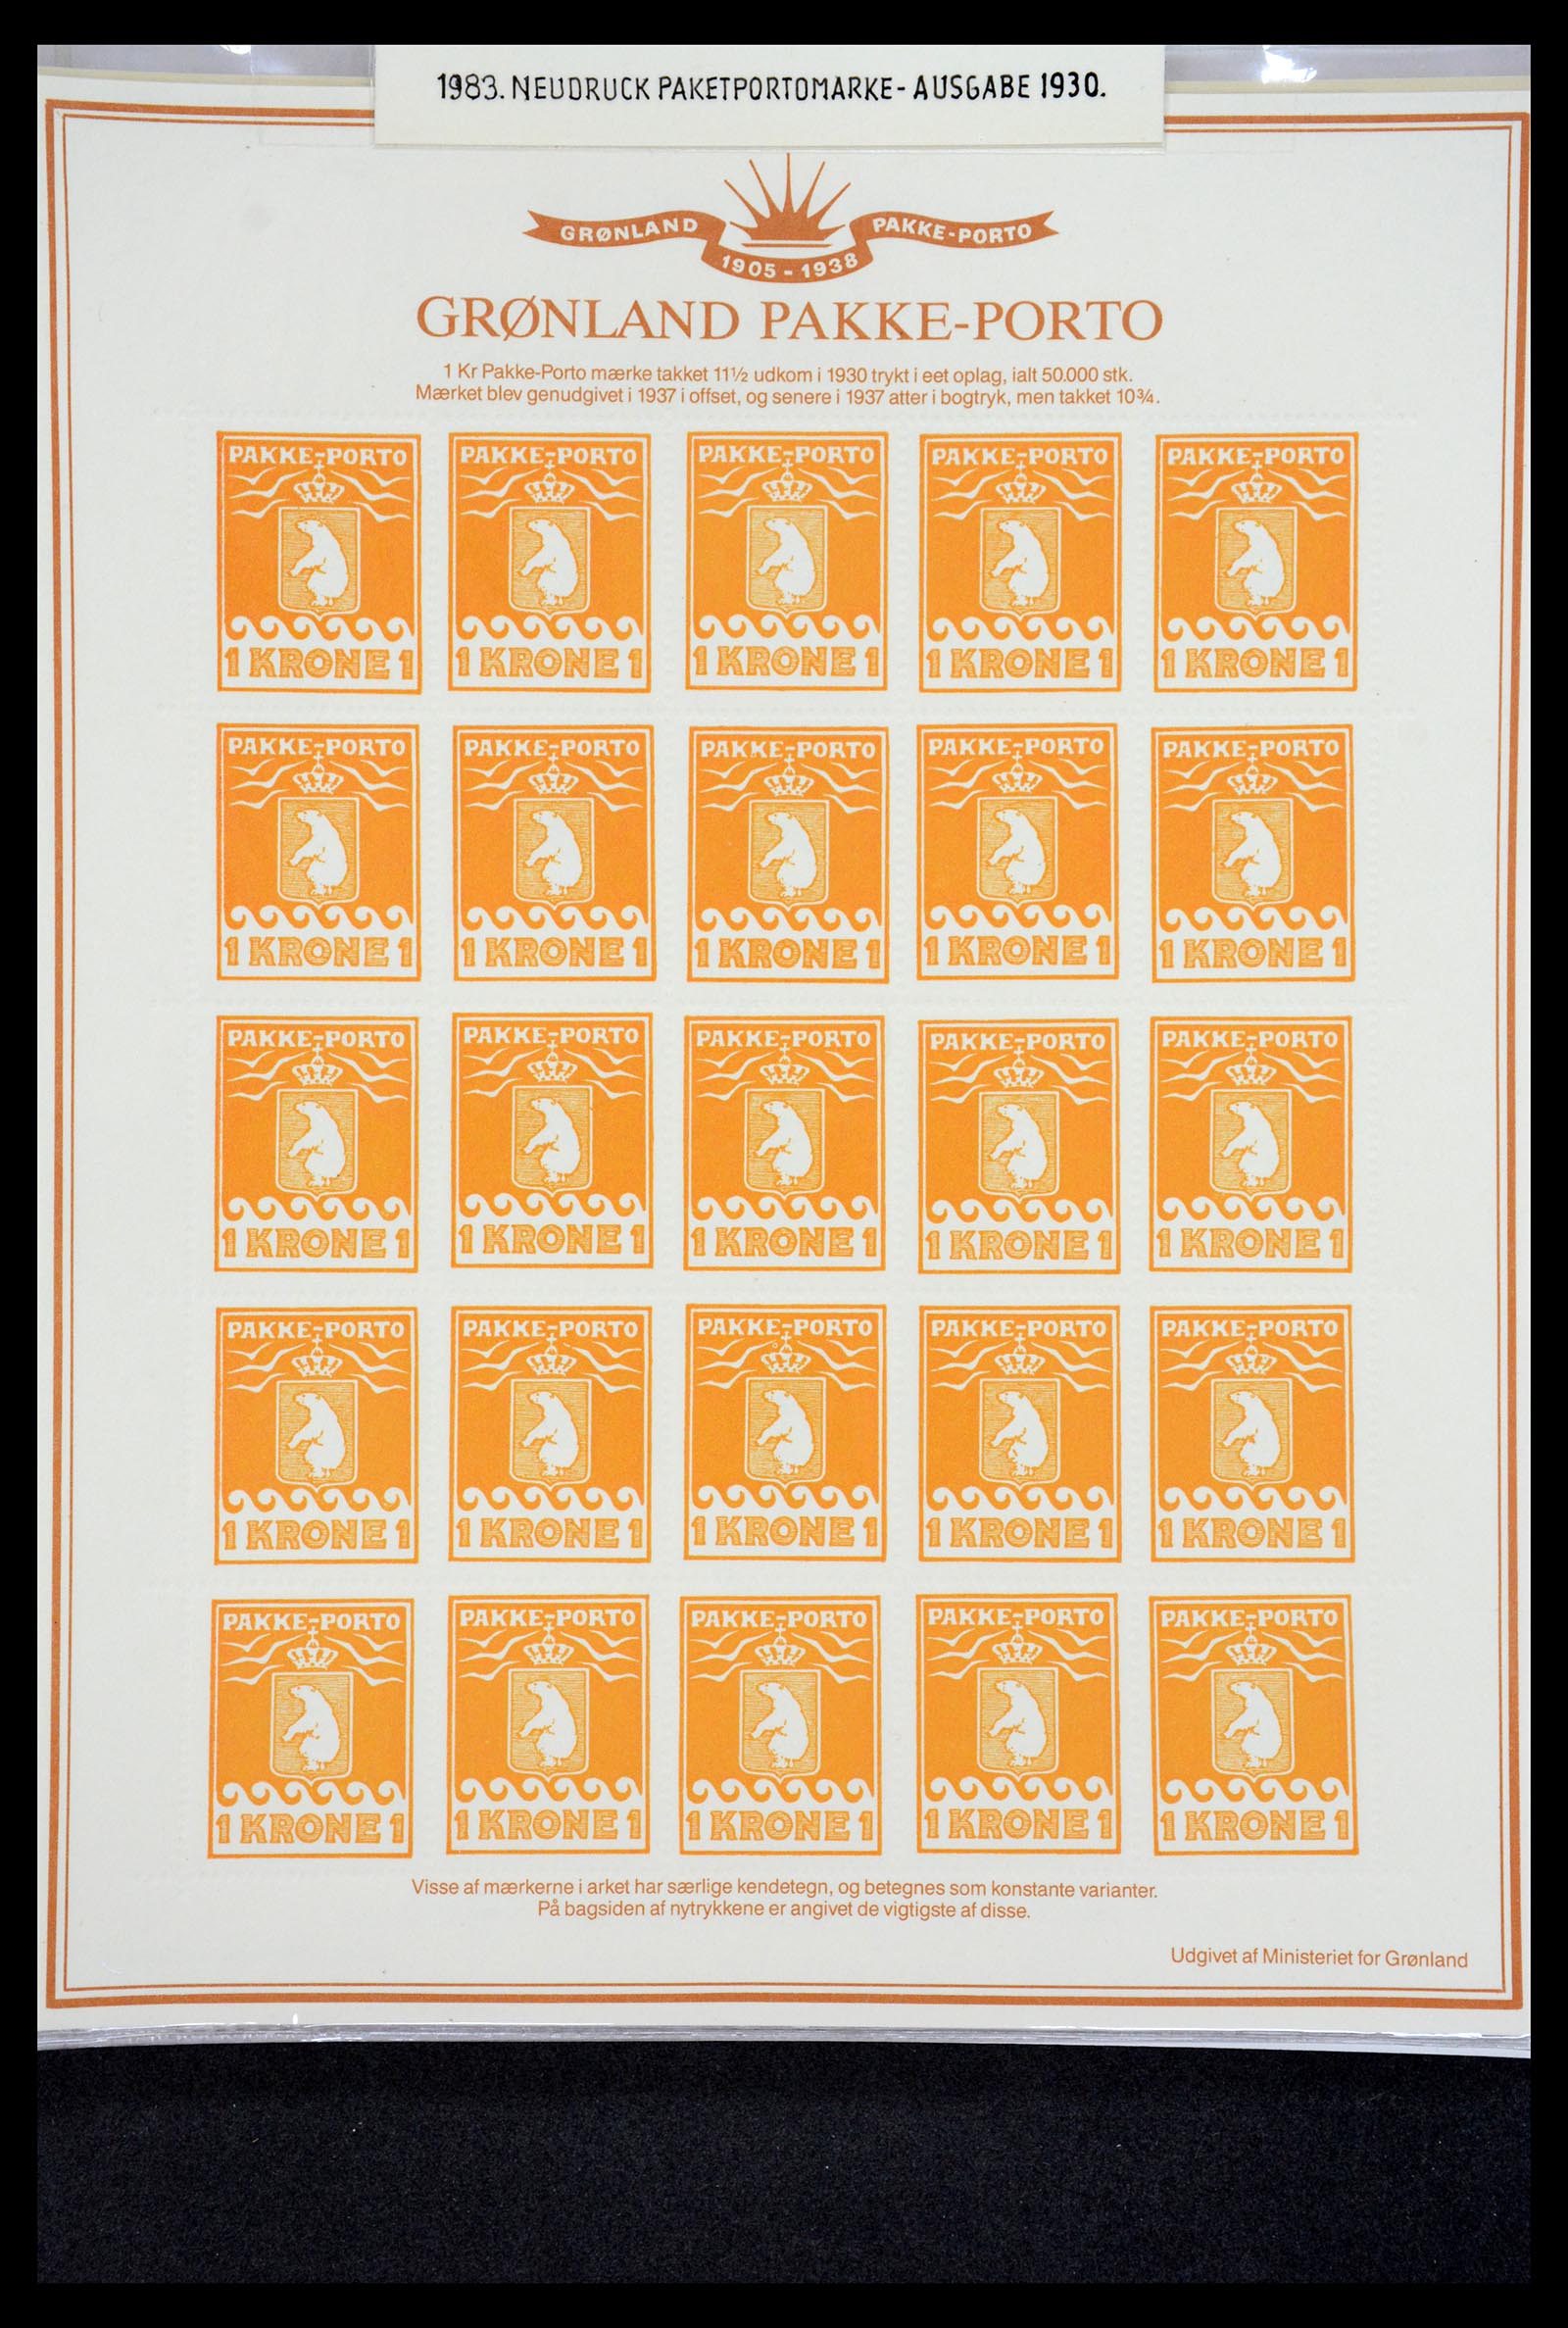 36748 020 - Stamp collection 36748 Greenland pakke-porto 1905-1930.